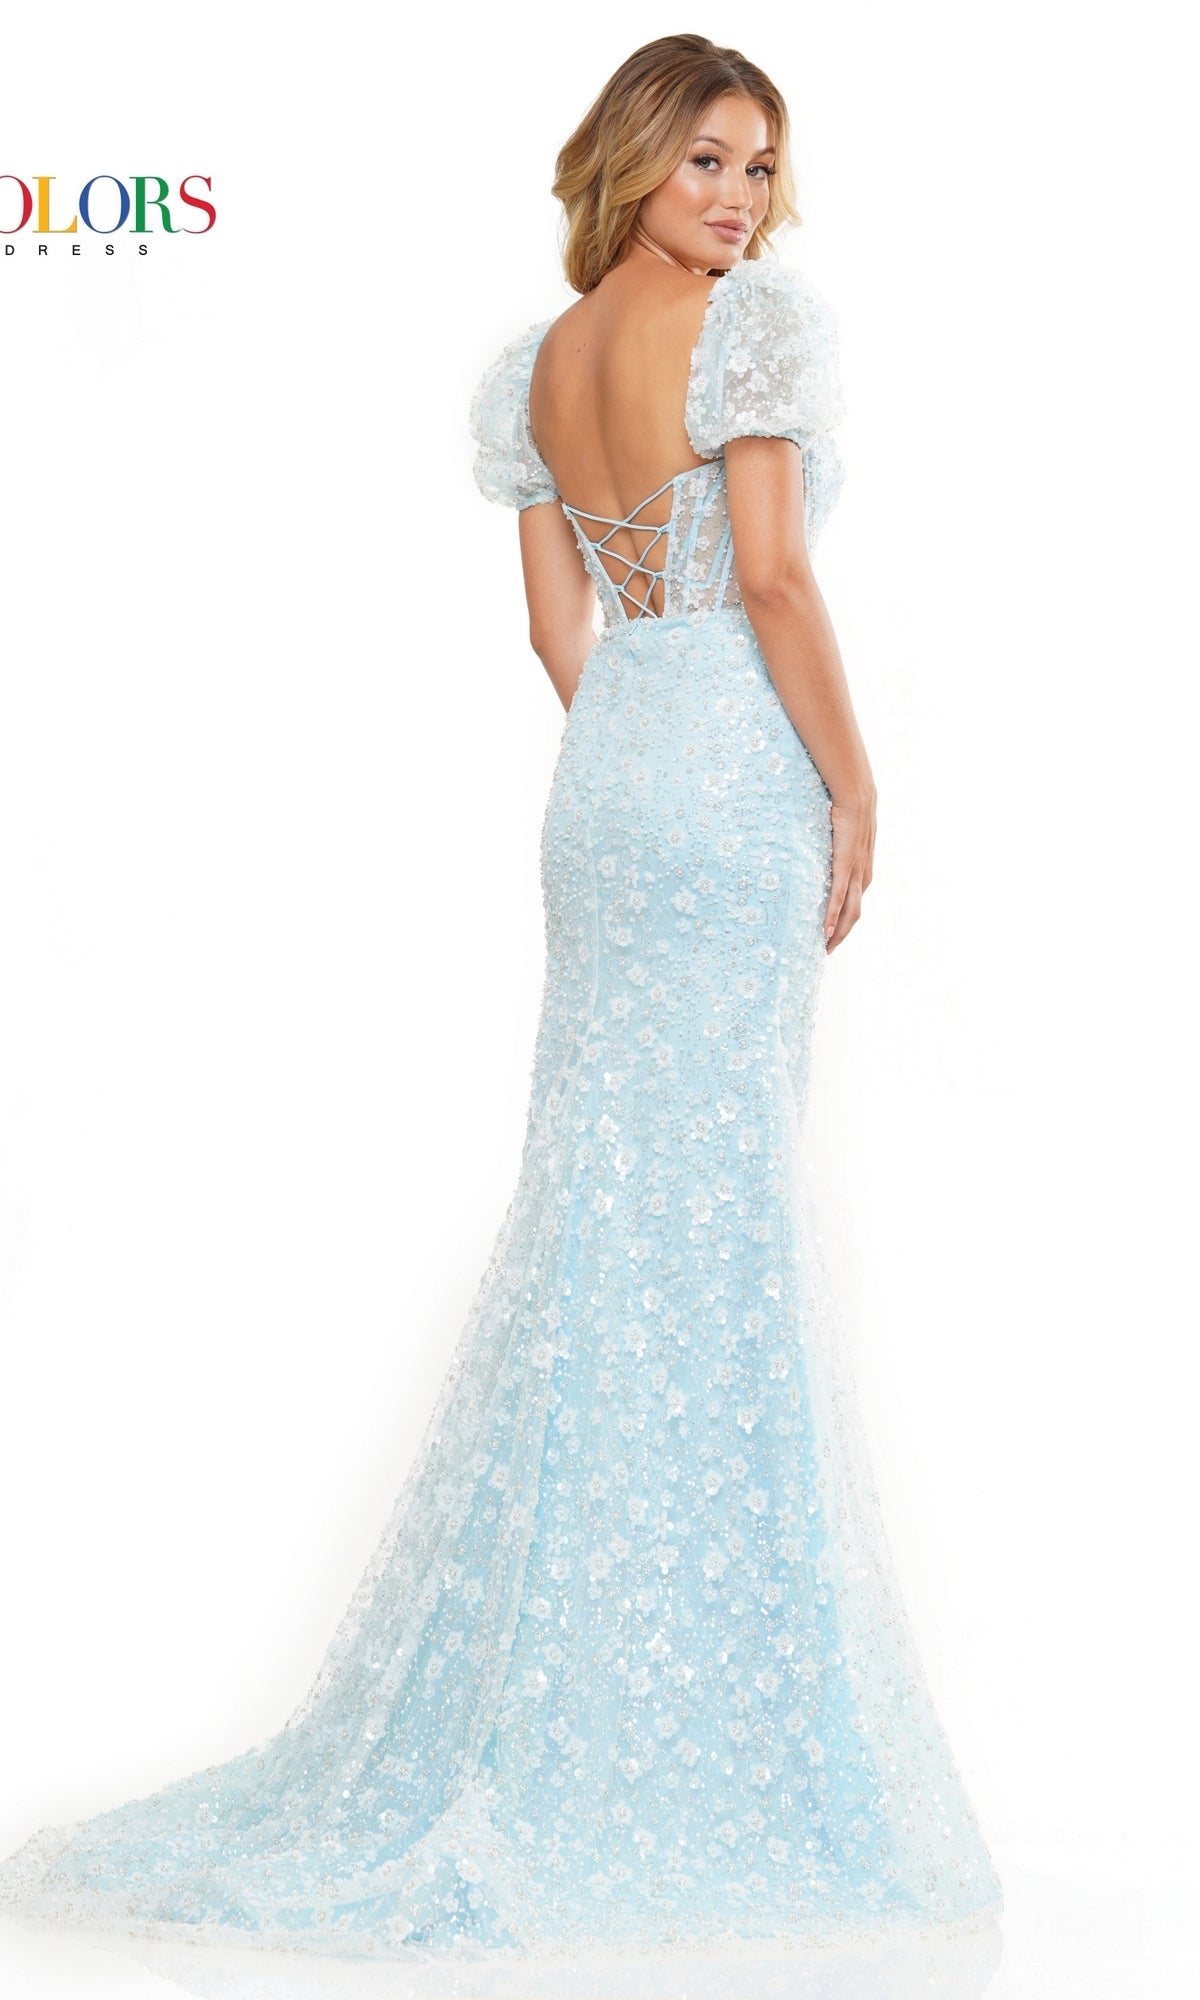 Puff-Sleeve Sheer-Bodice Long Prom Dress 3290